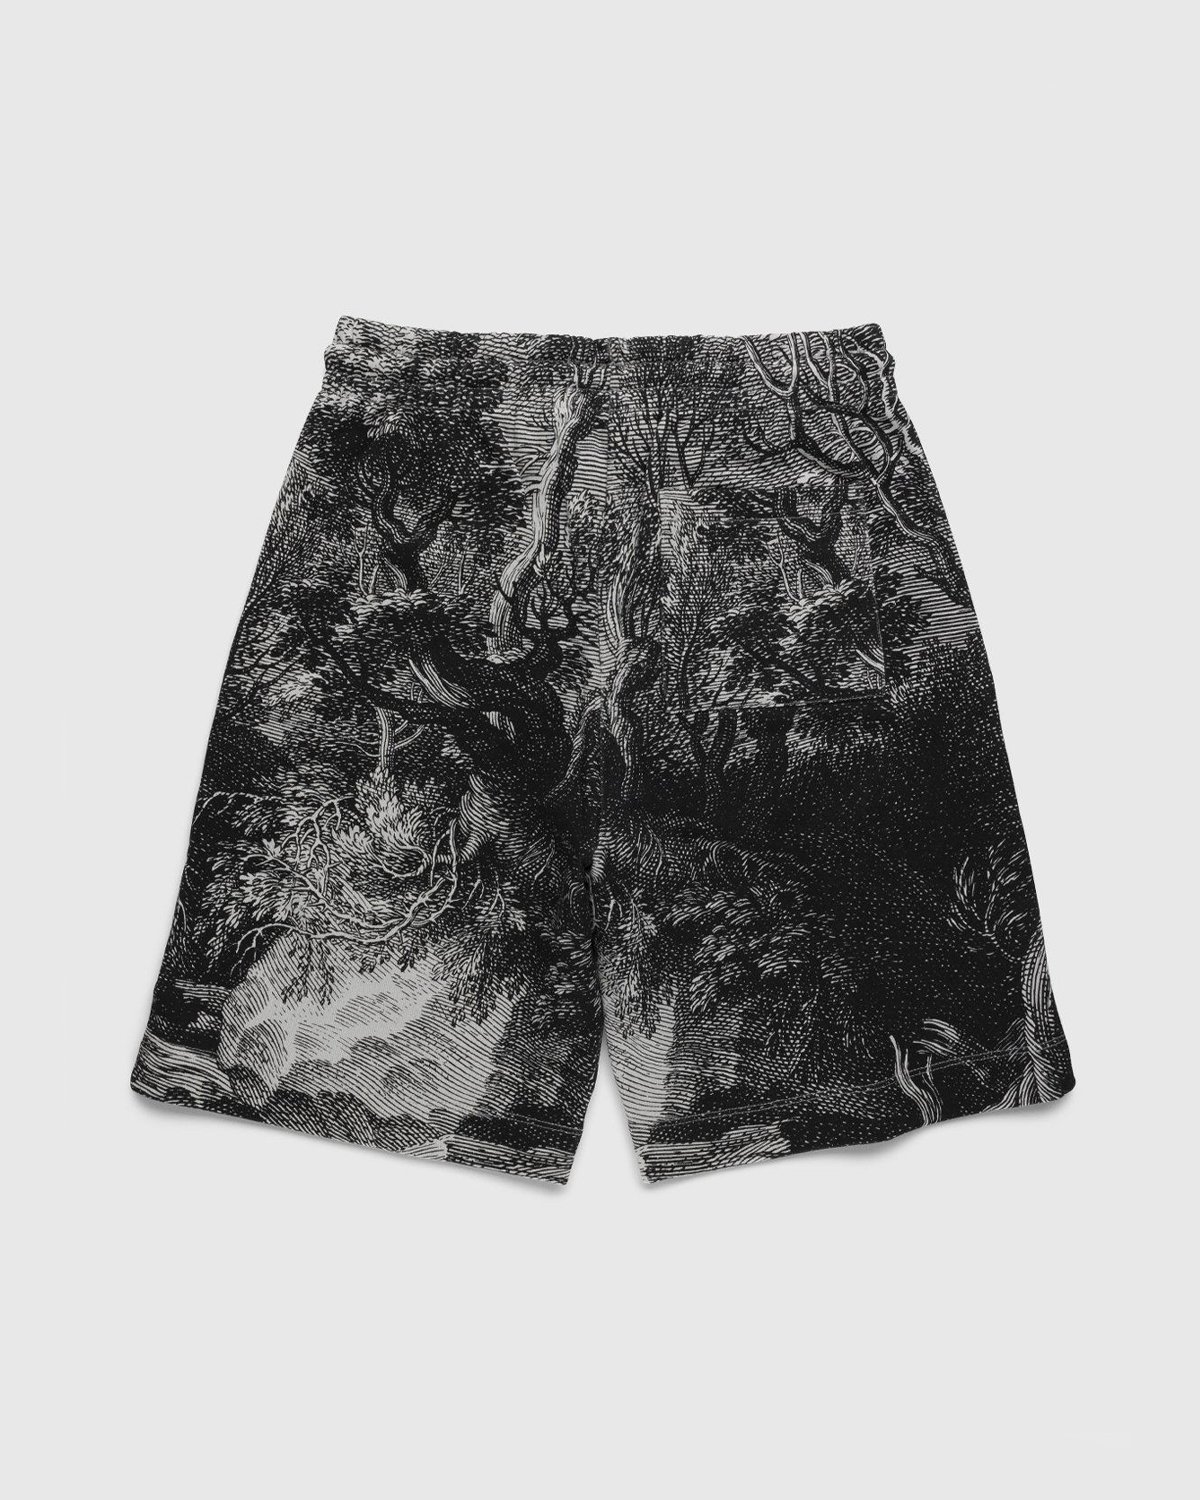 Dries van Noten - Habor Shorts Cement - Clothing - Grey - Image 2